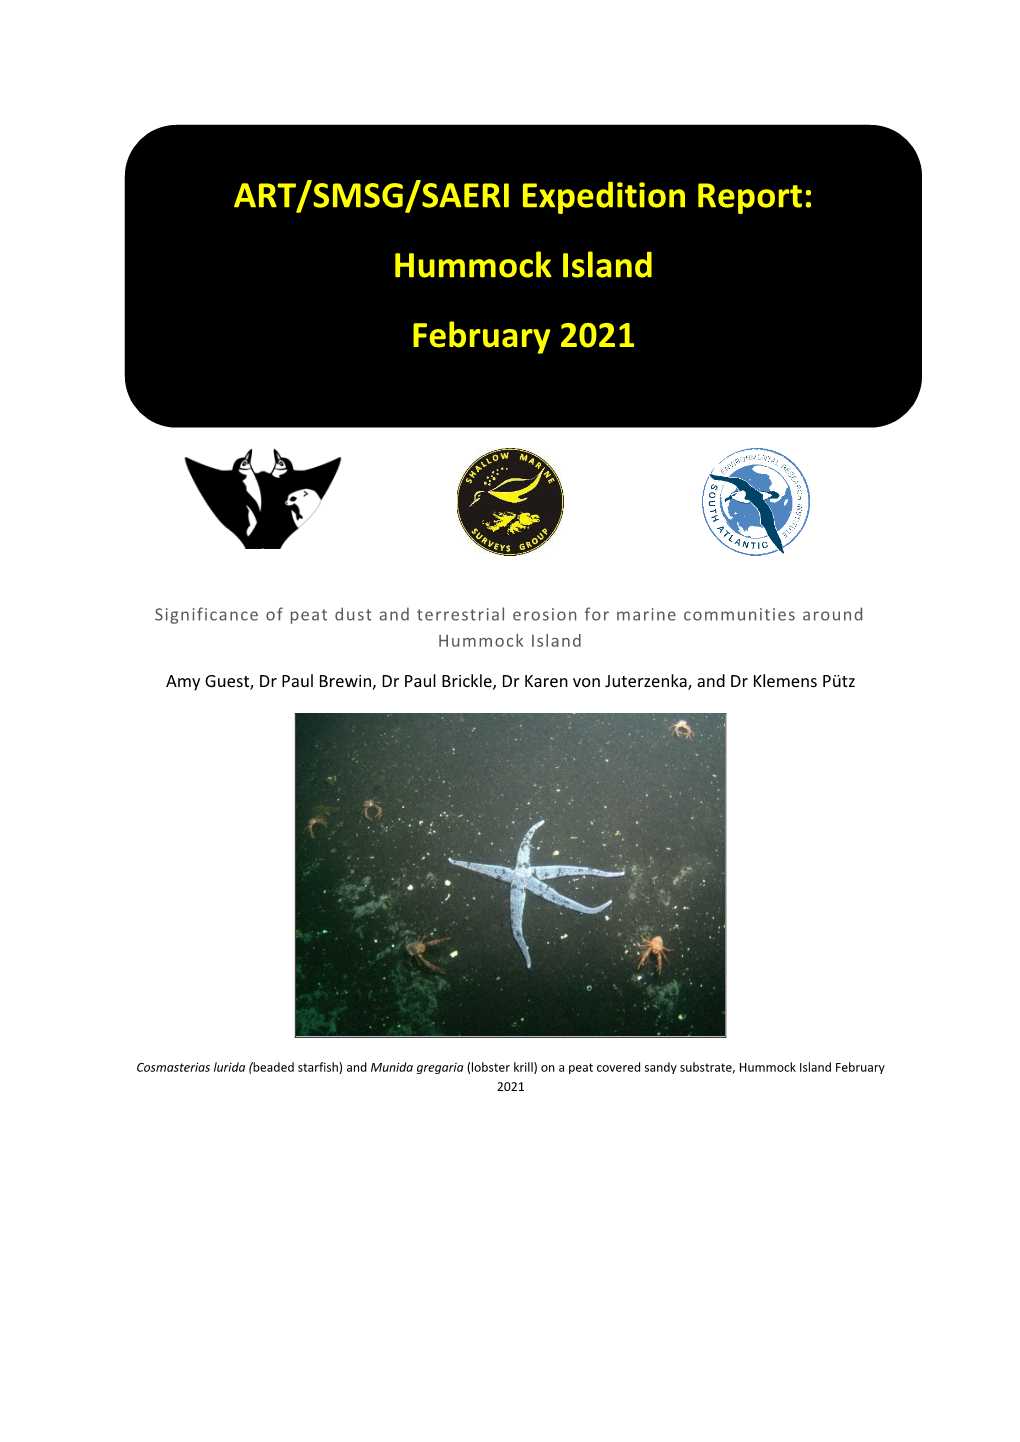 ART/SMSG/SAERI Expedition Report: Hummock Island February 2021